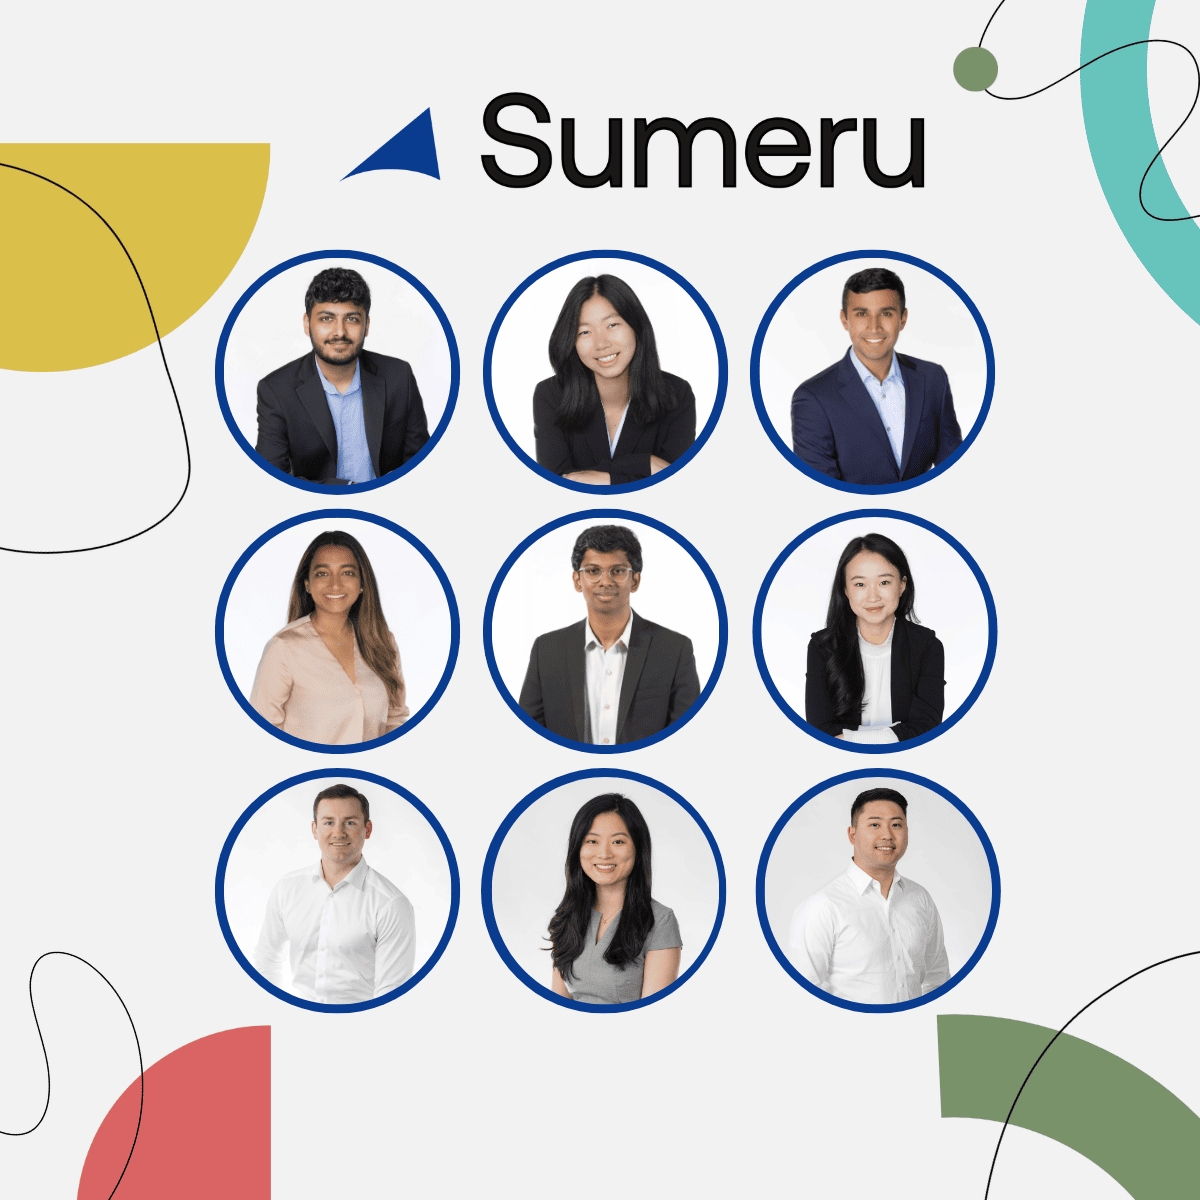 Sumeru Announces Summer Hires Promotions